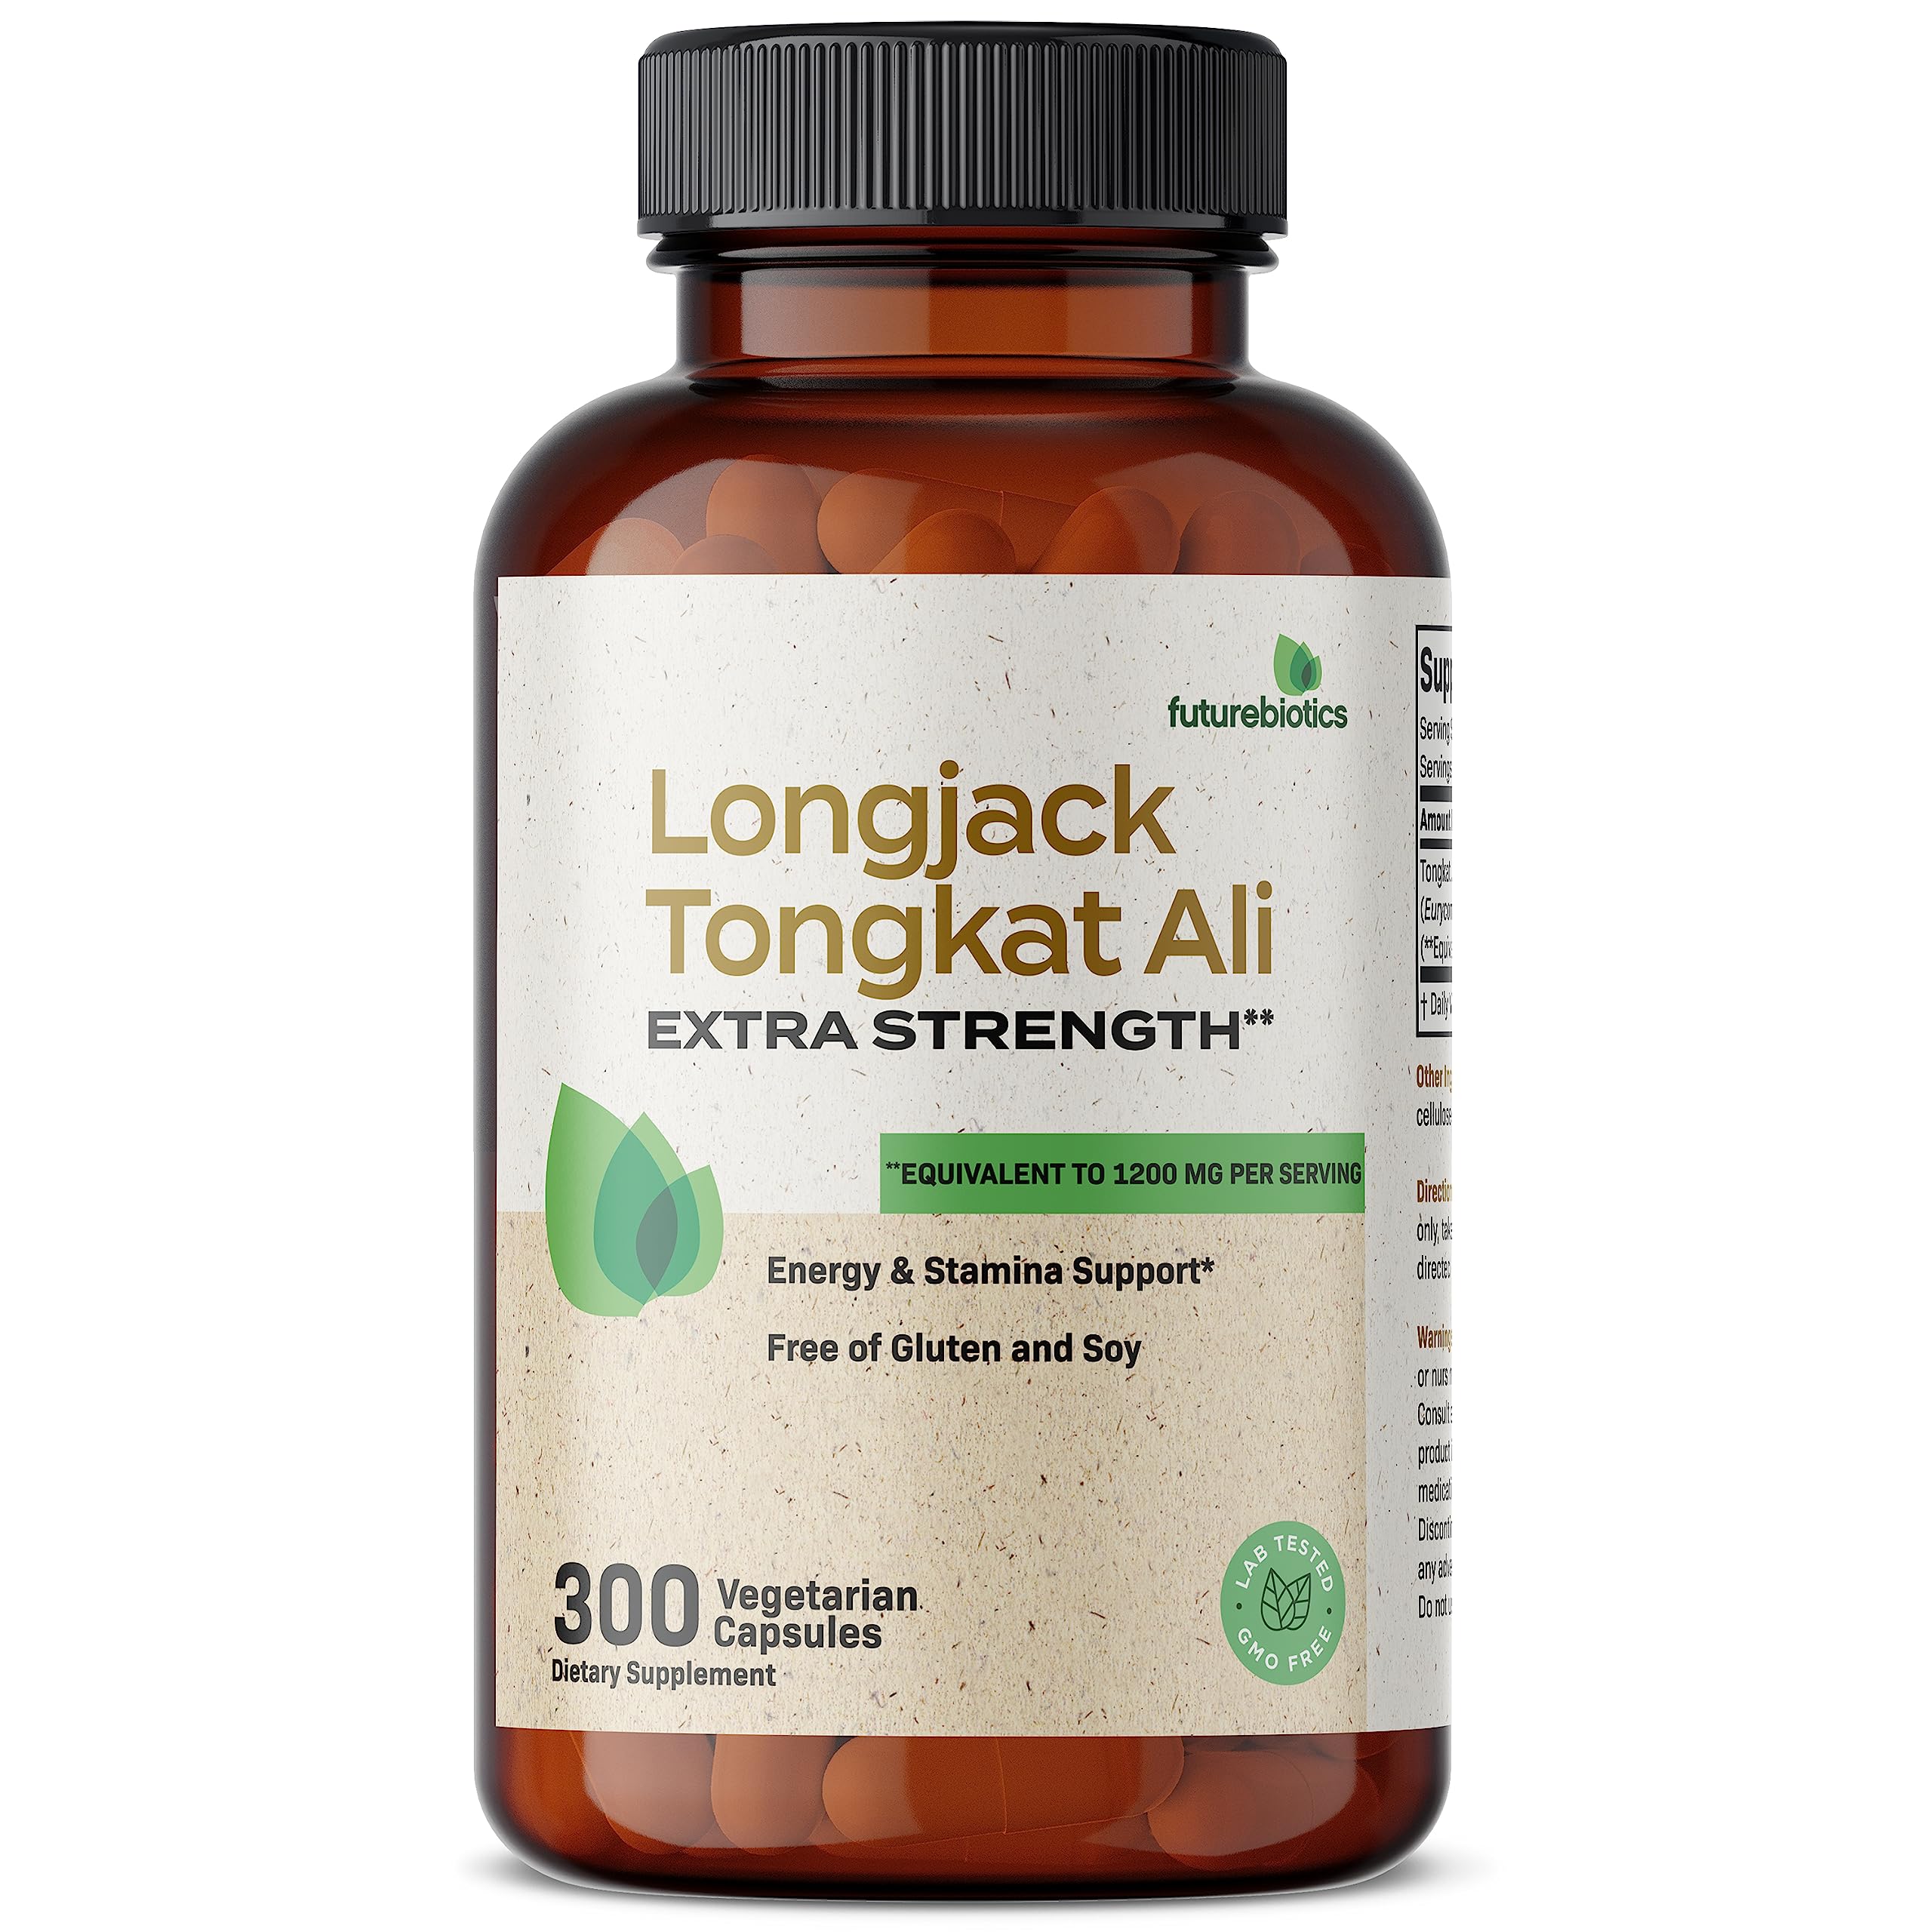 Futurebiotics Longjack Tongkat Ali 1200 MG Energy & Stamina Support, Non-GMO, 300 Vegetarian Capsules